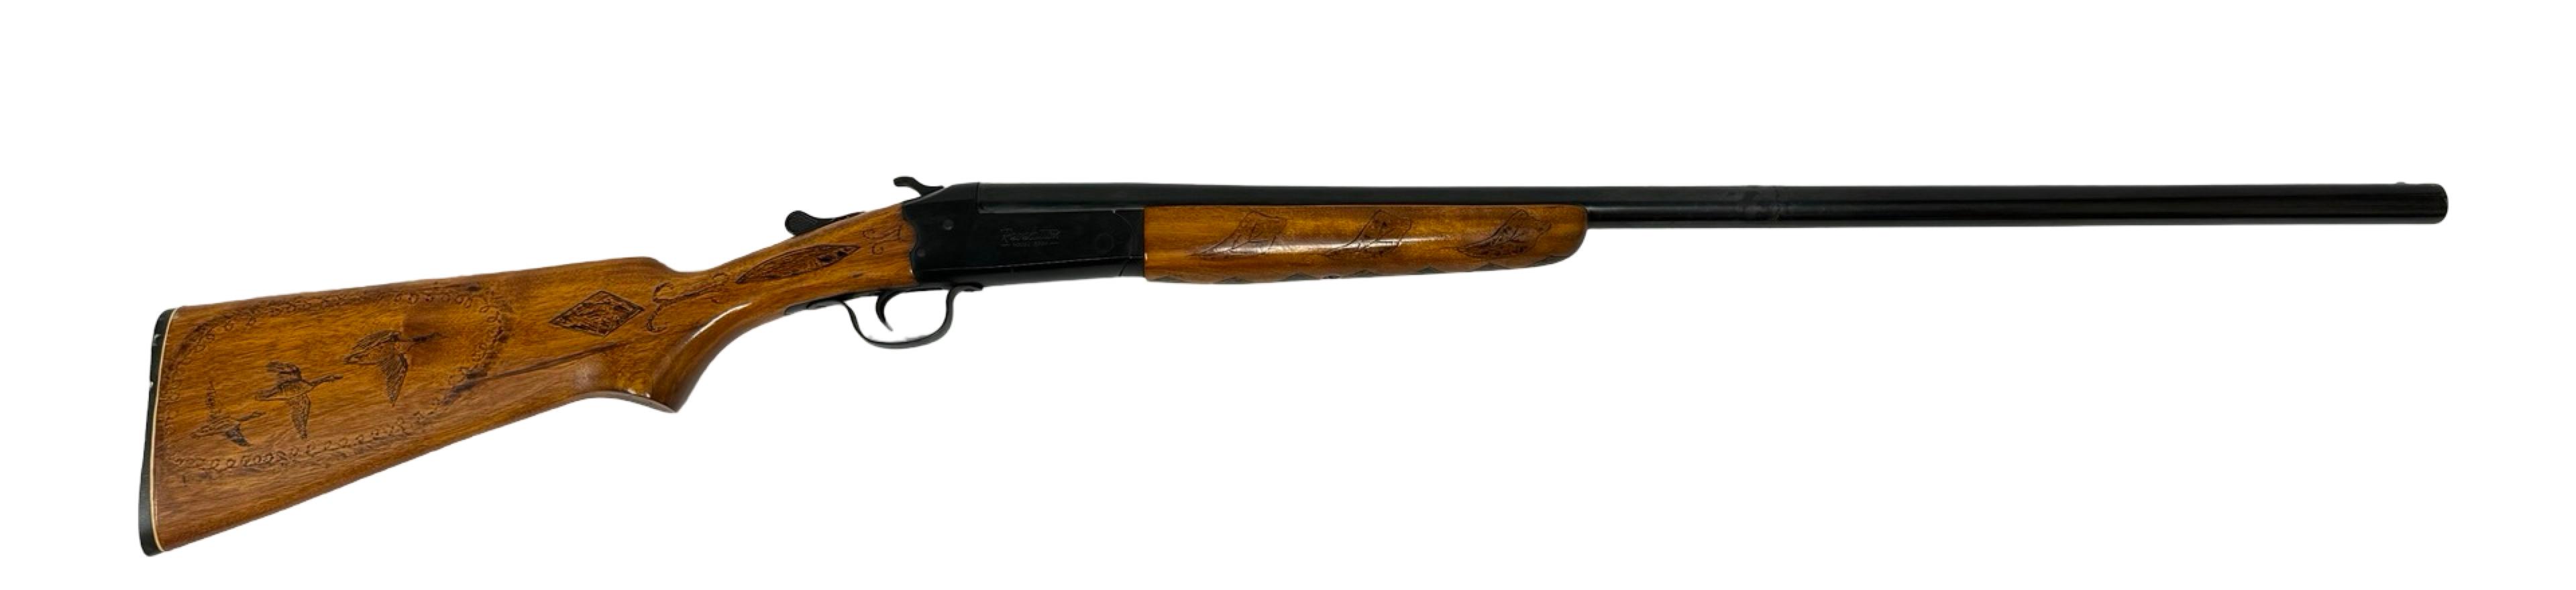 Revelation Model 350A 12 GA. Single Shotgun w/ Engraved Stock